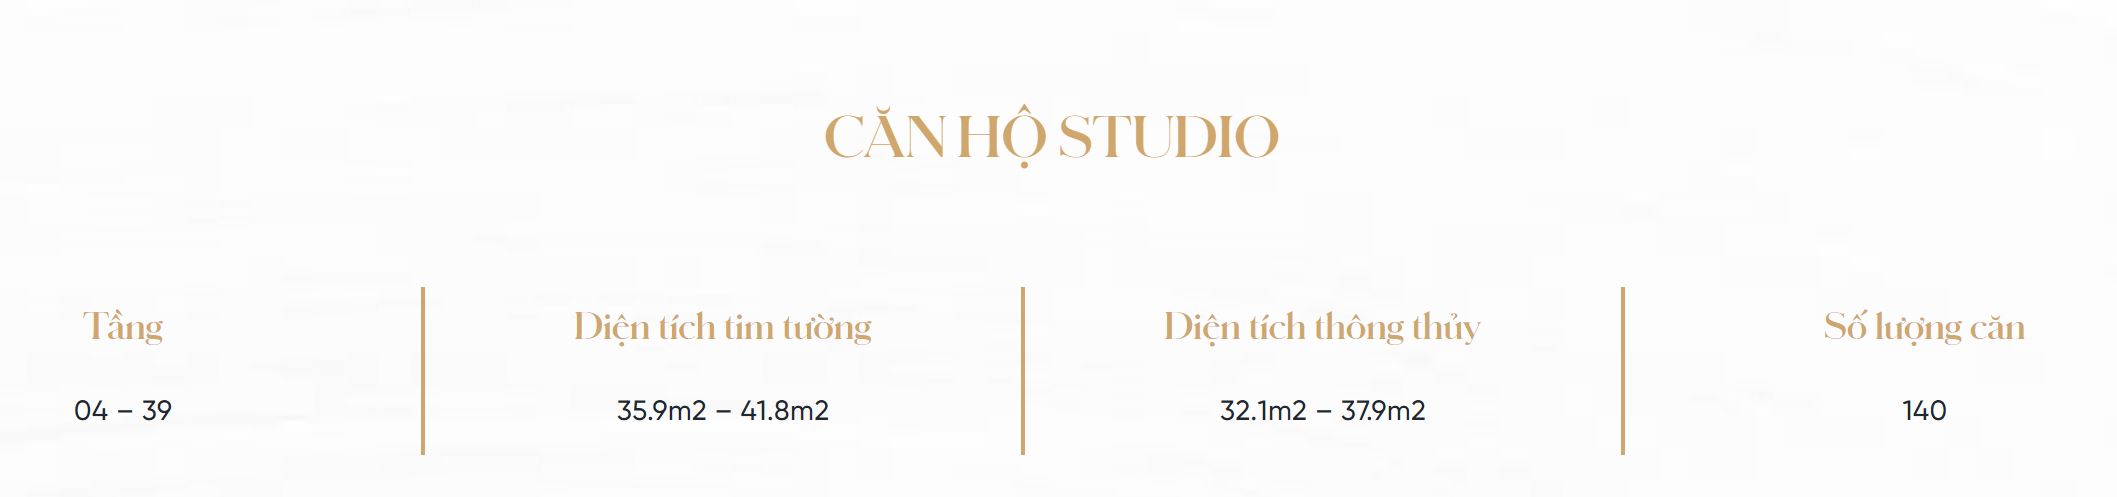 can-ho-studio-cadia-quy-nhon-5